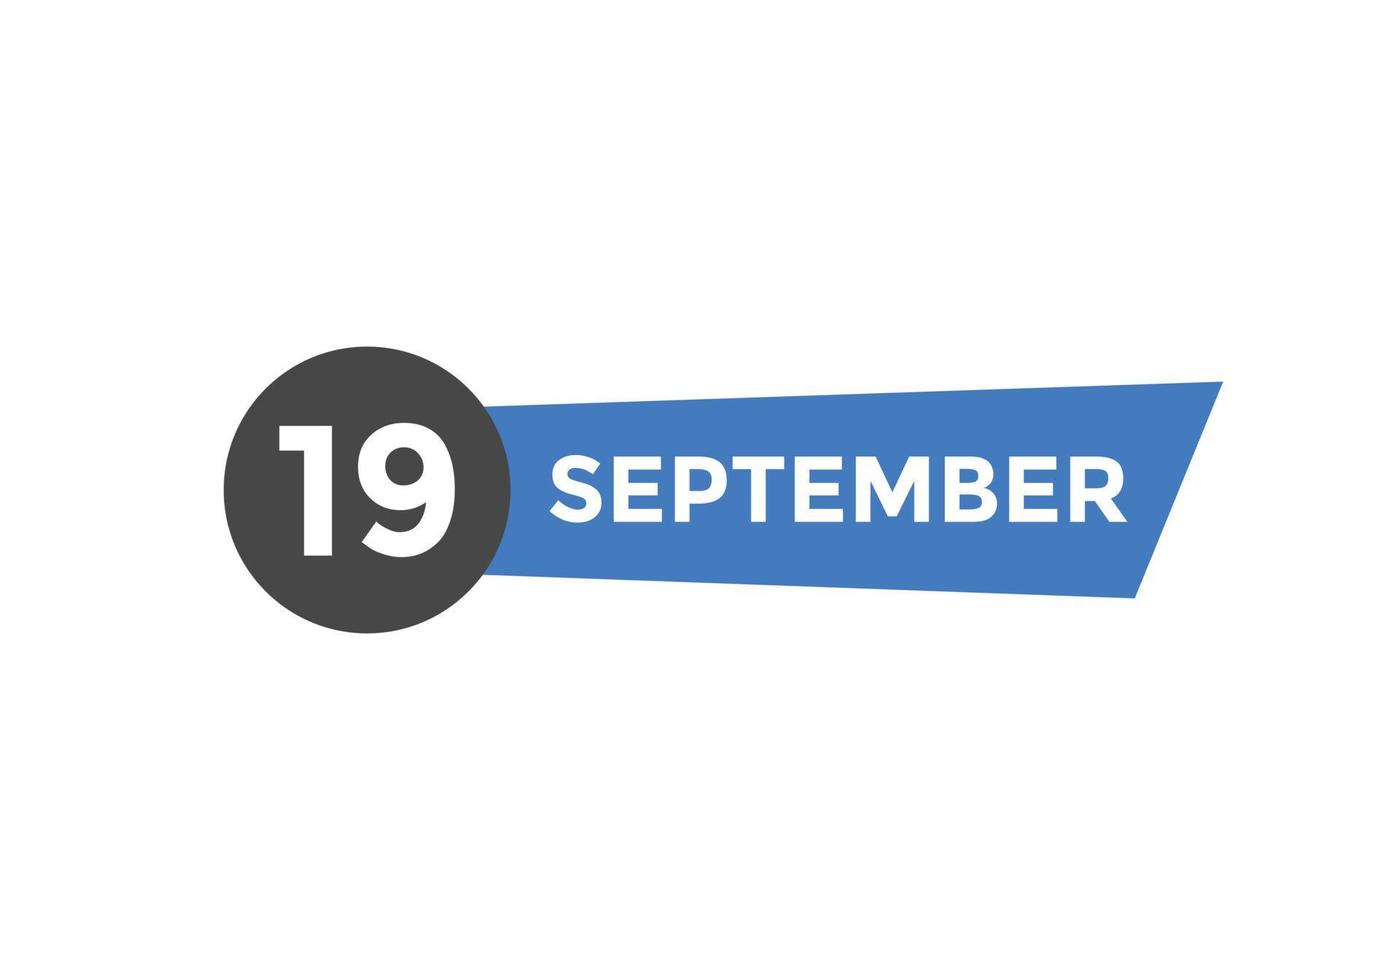 september 19 calendar reminder. 19th september daily calendar icon template. Calendar 19th september icon Design template. Vector illustration